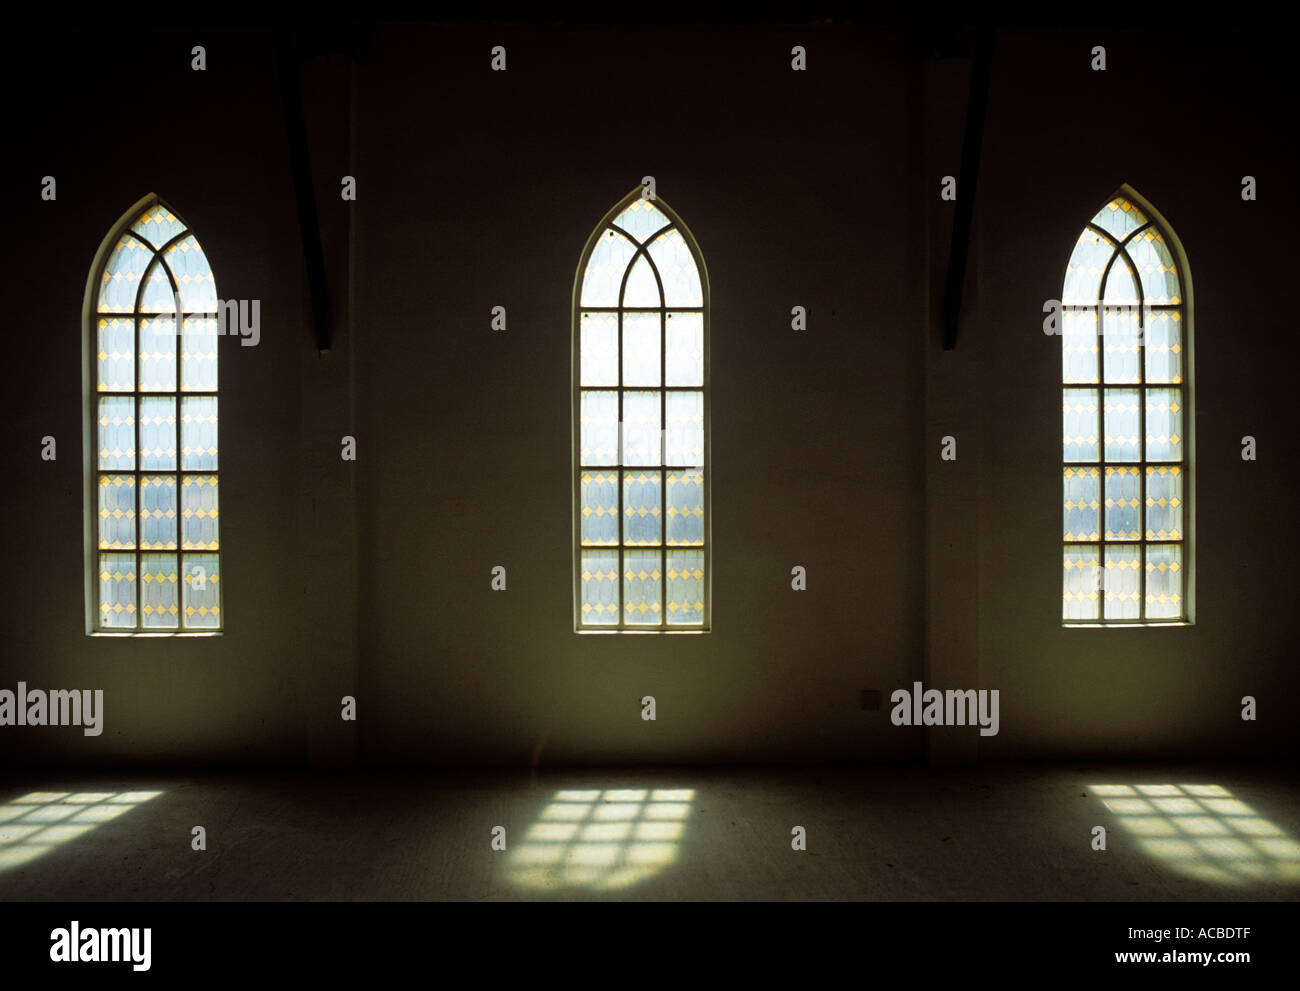 windows of church as backdrop of movie scenery Stock Photo